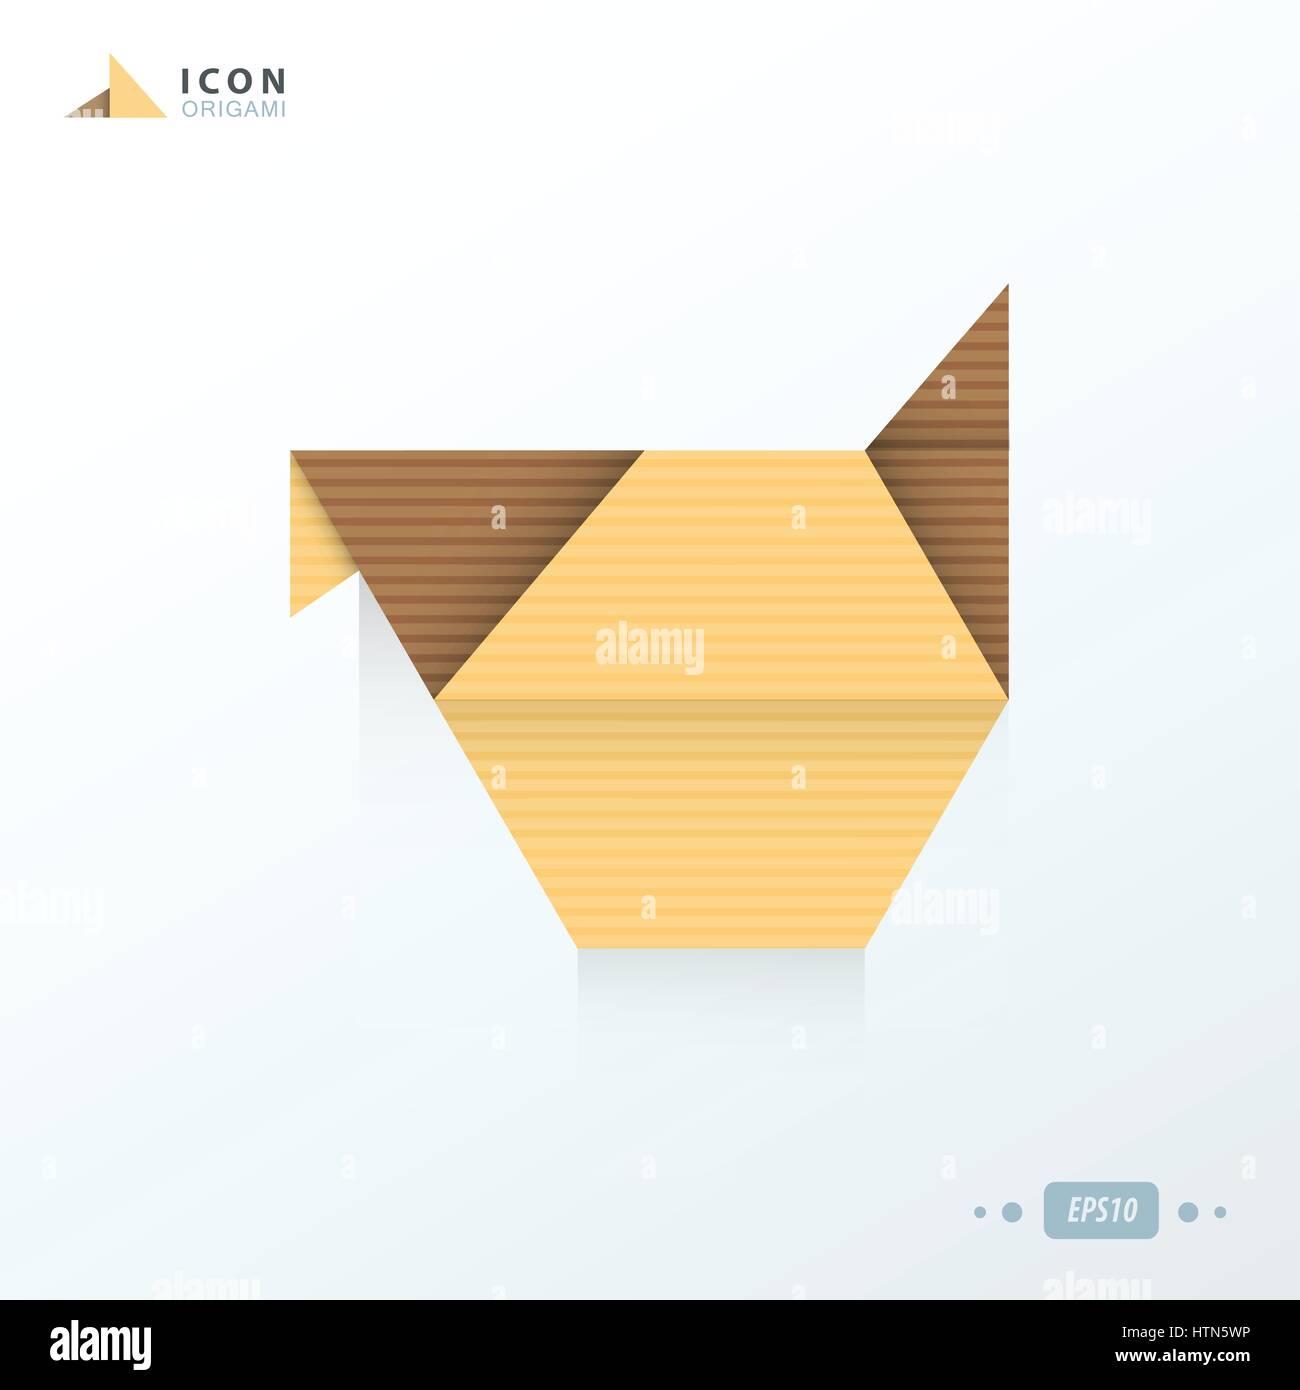 chicken icon origami Stock Vector